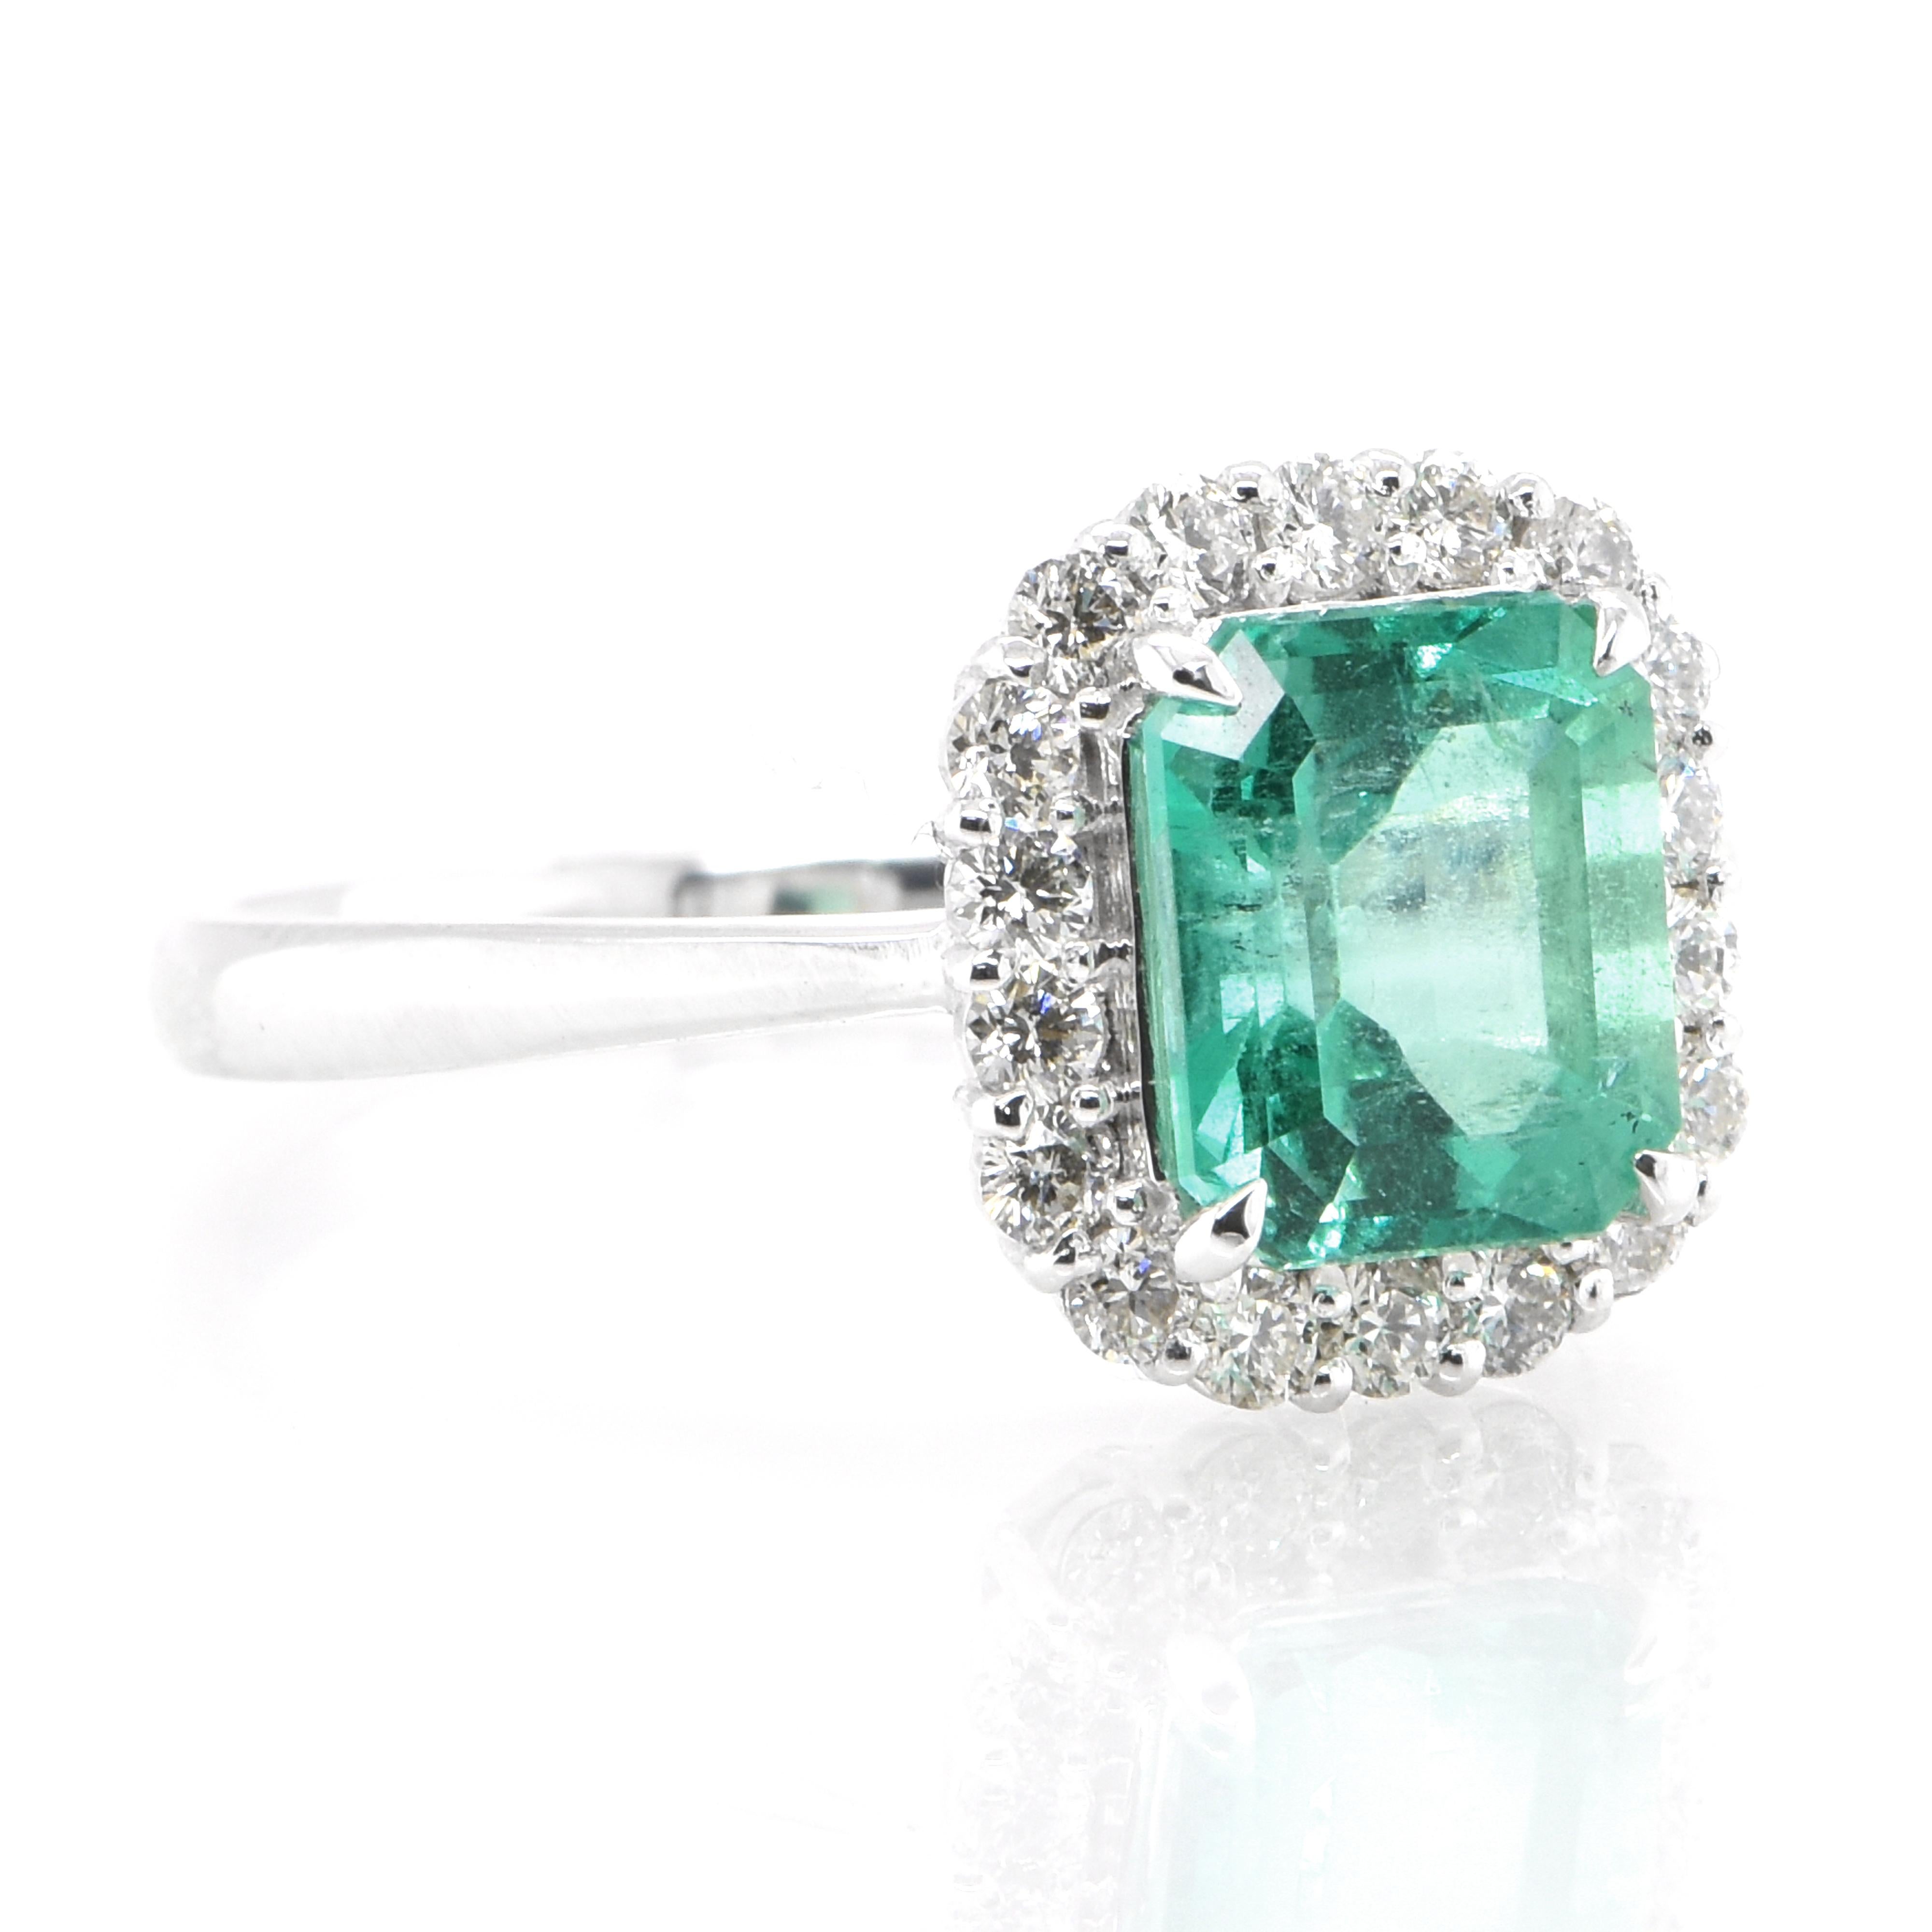 Modern 1.93 Carat Natural Emerald and Diamond Halo Cocktail Ring Set in Platinum